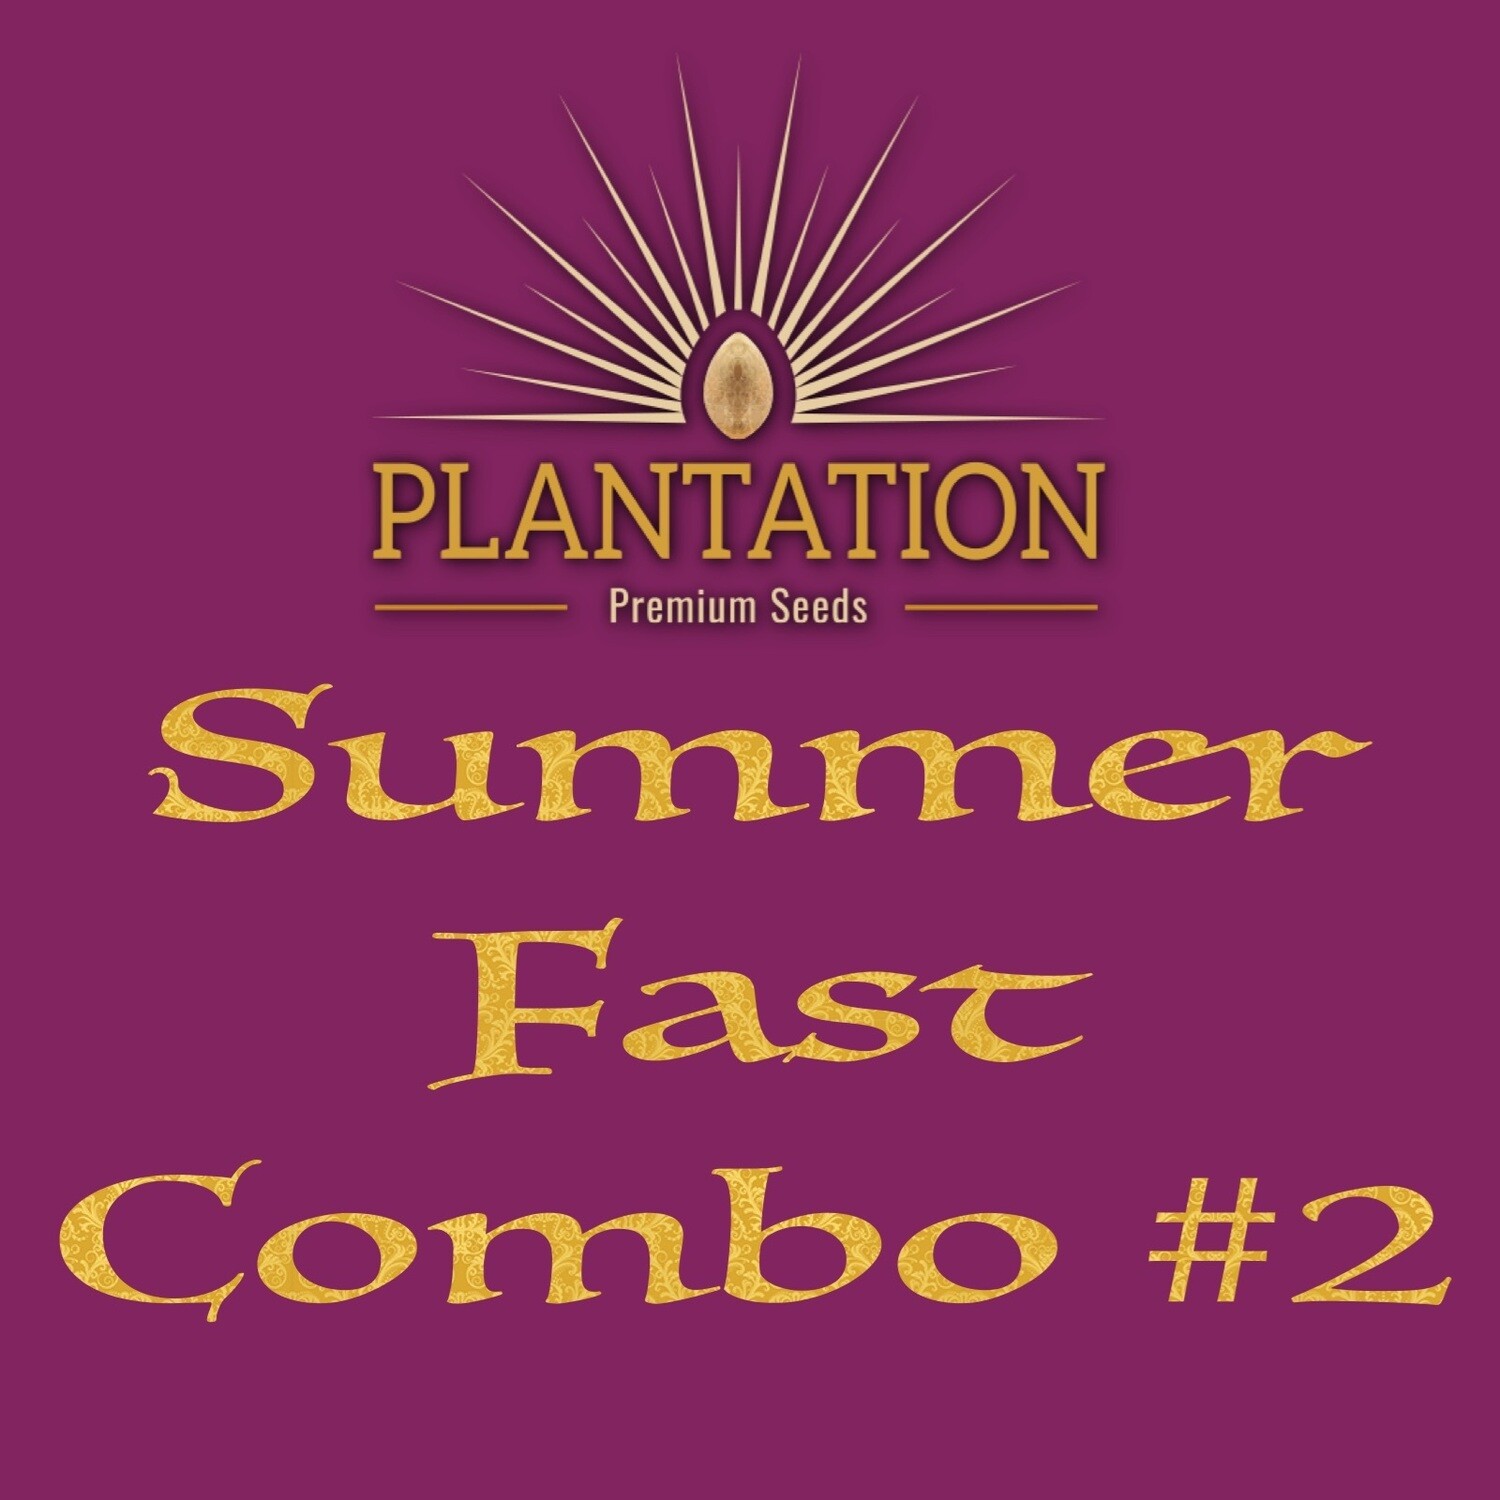 Summer (fast) Combo #2